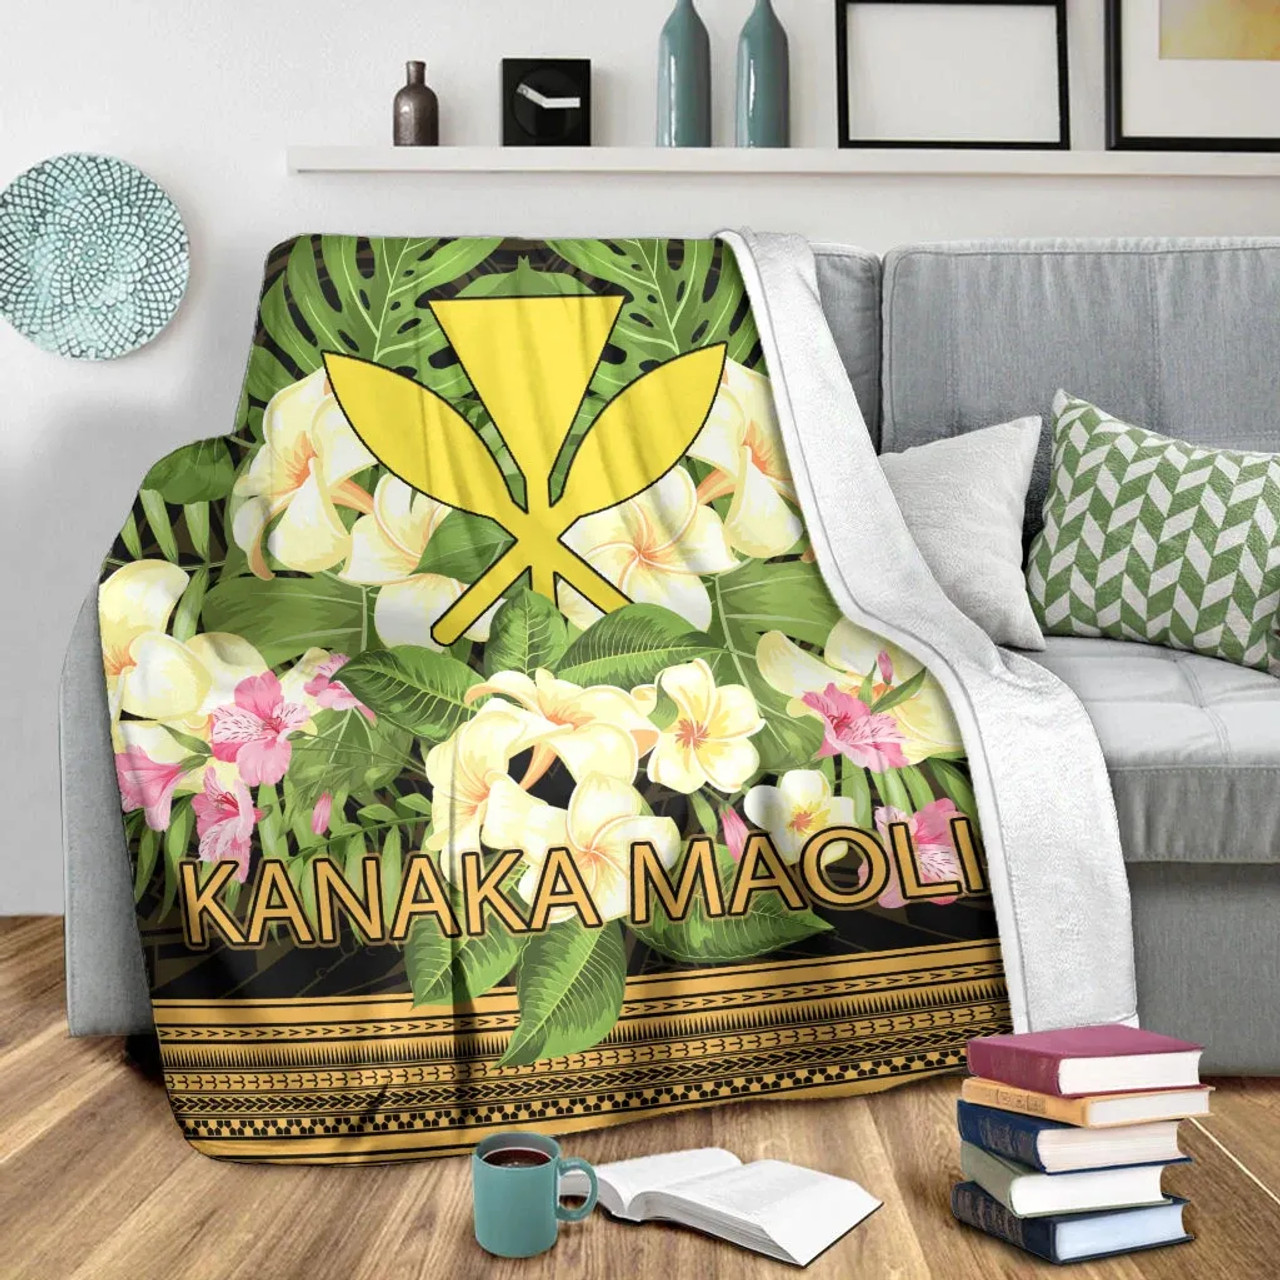 Hawaii Kanaka Maoli Premium Blanket - Polynesian Gold Patterns Collection 3